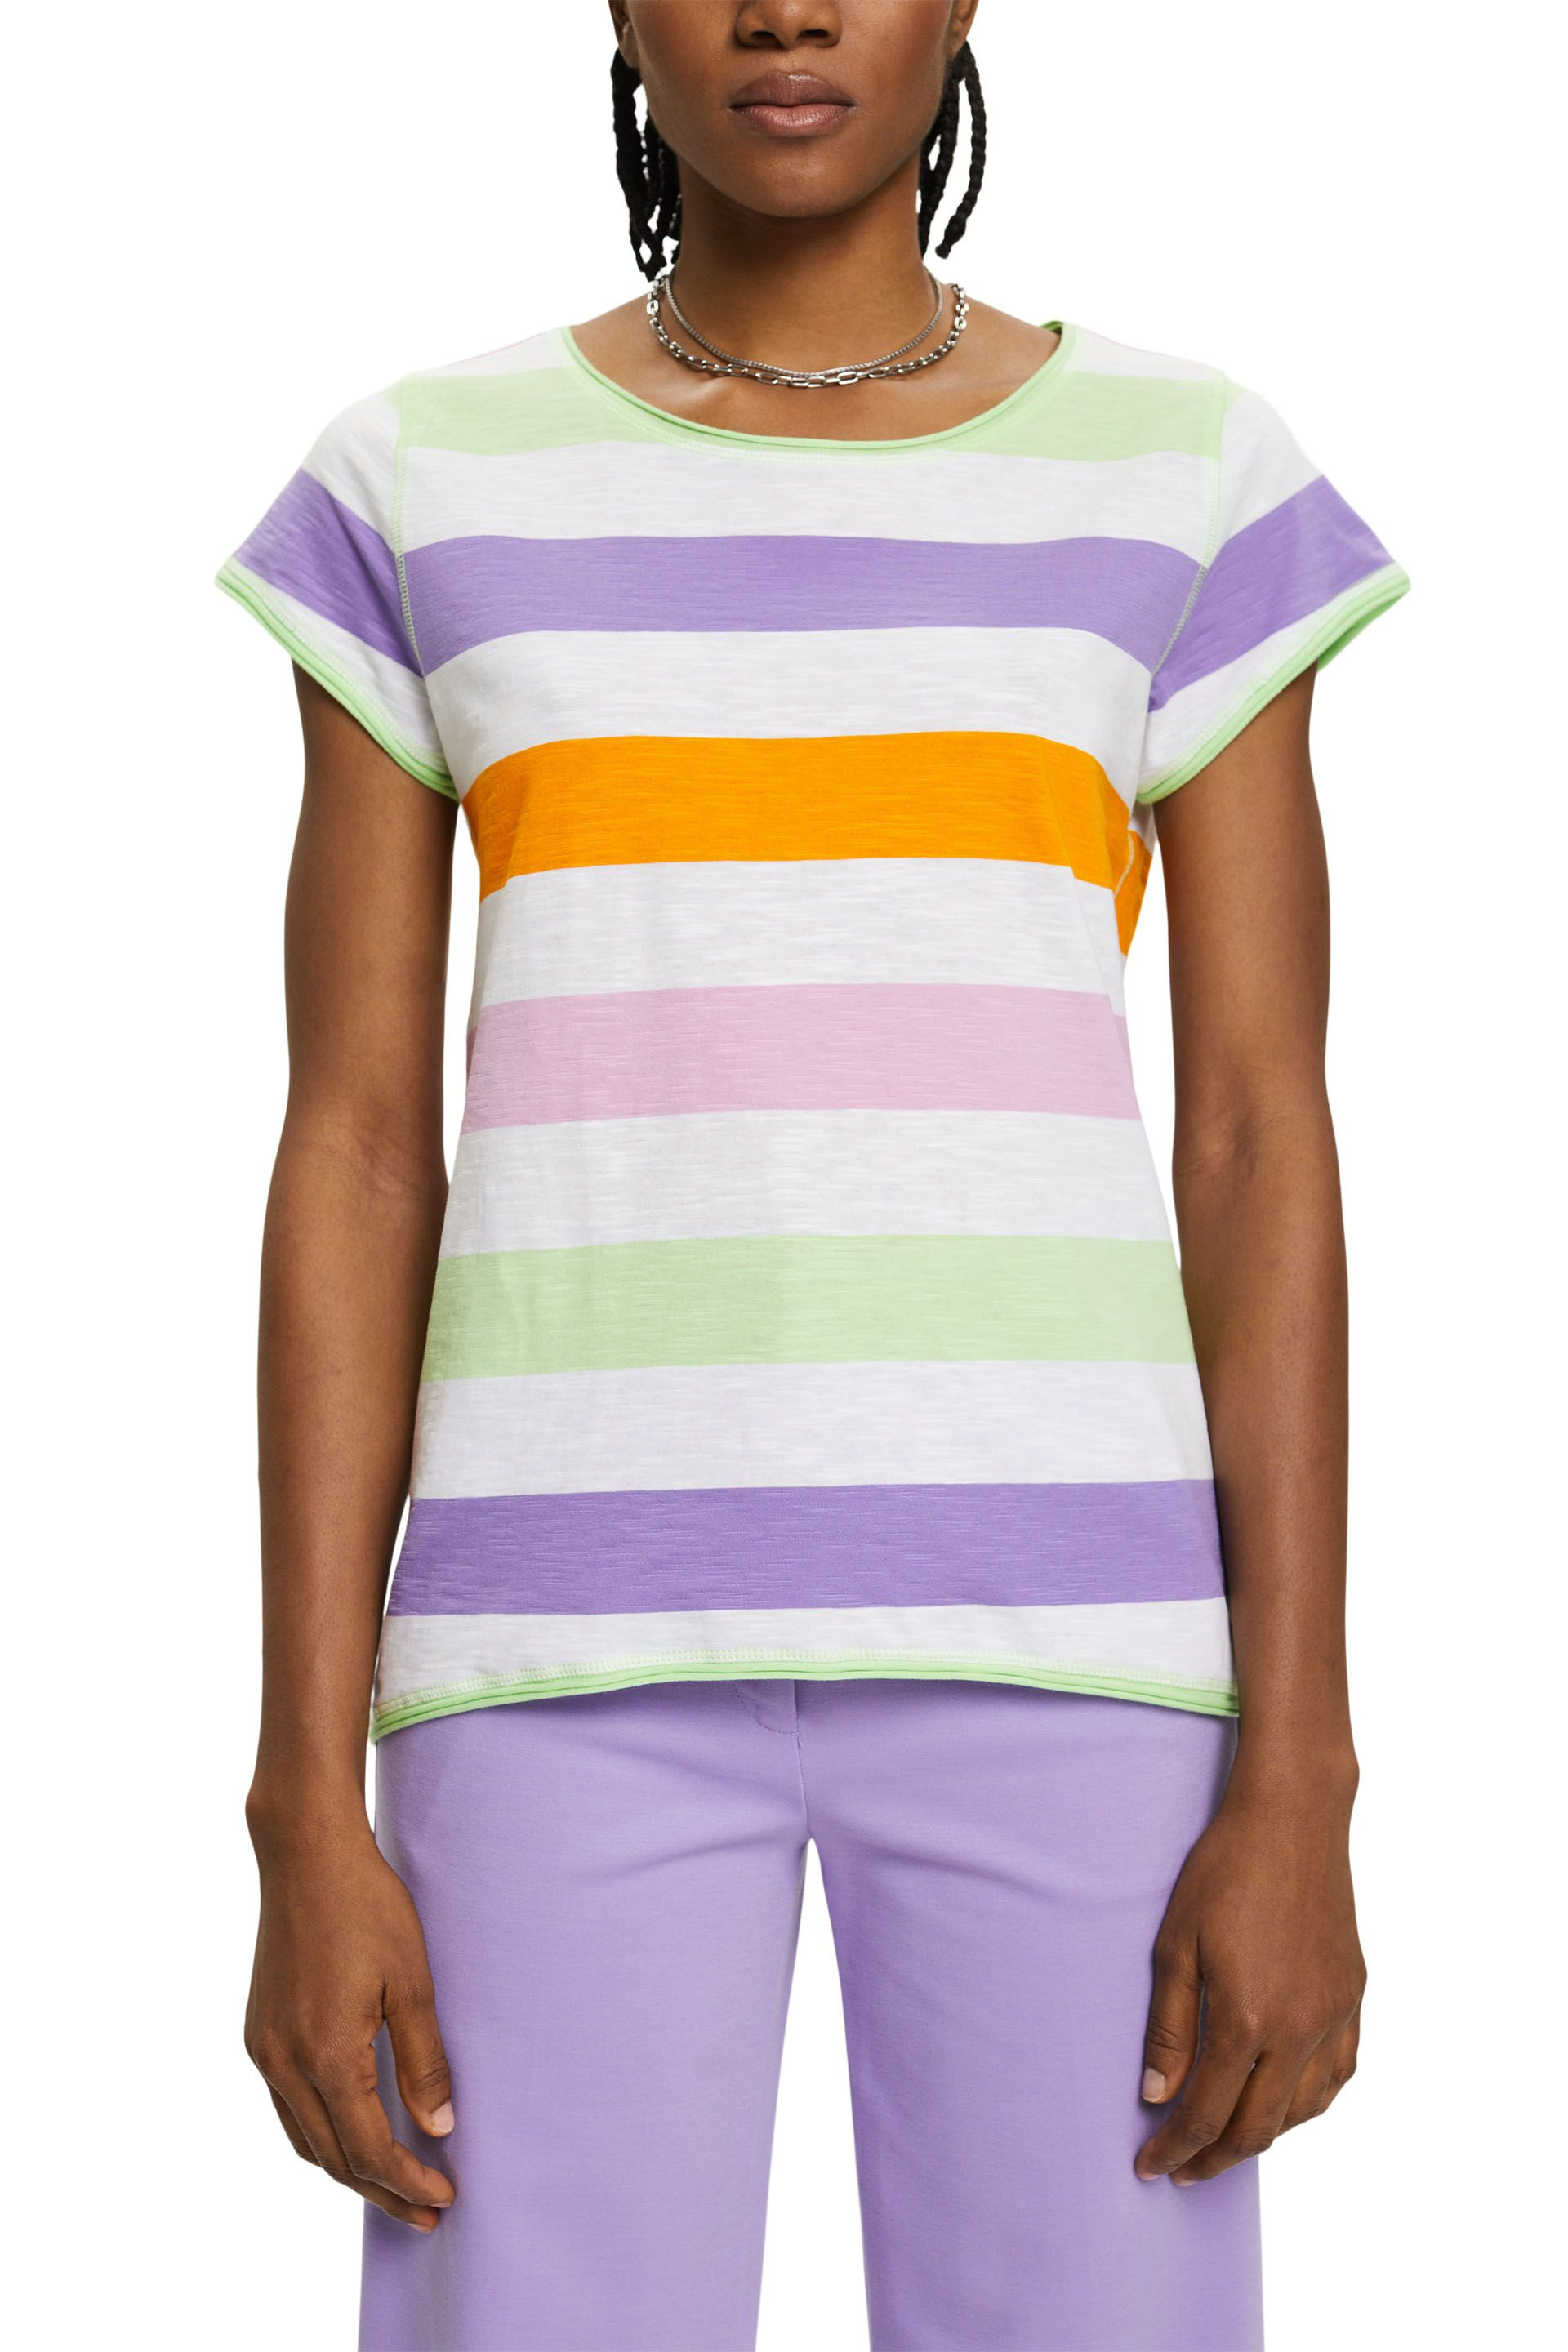 Esprit - T-shirt a righe, Multicolor, large image number 2